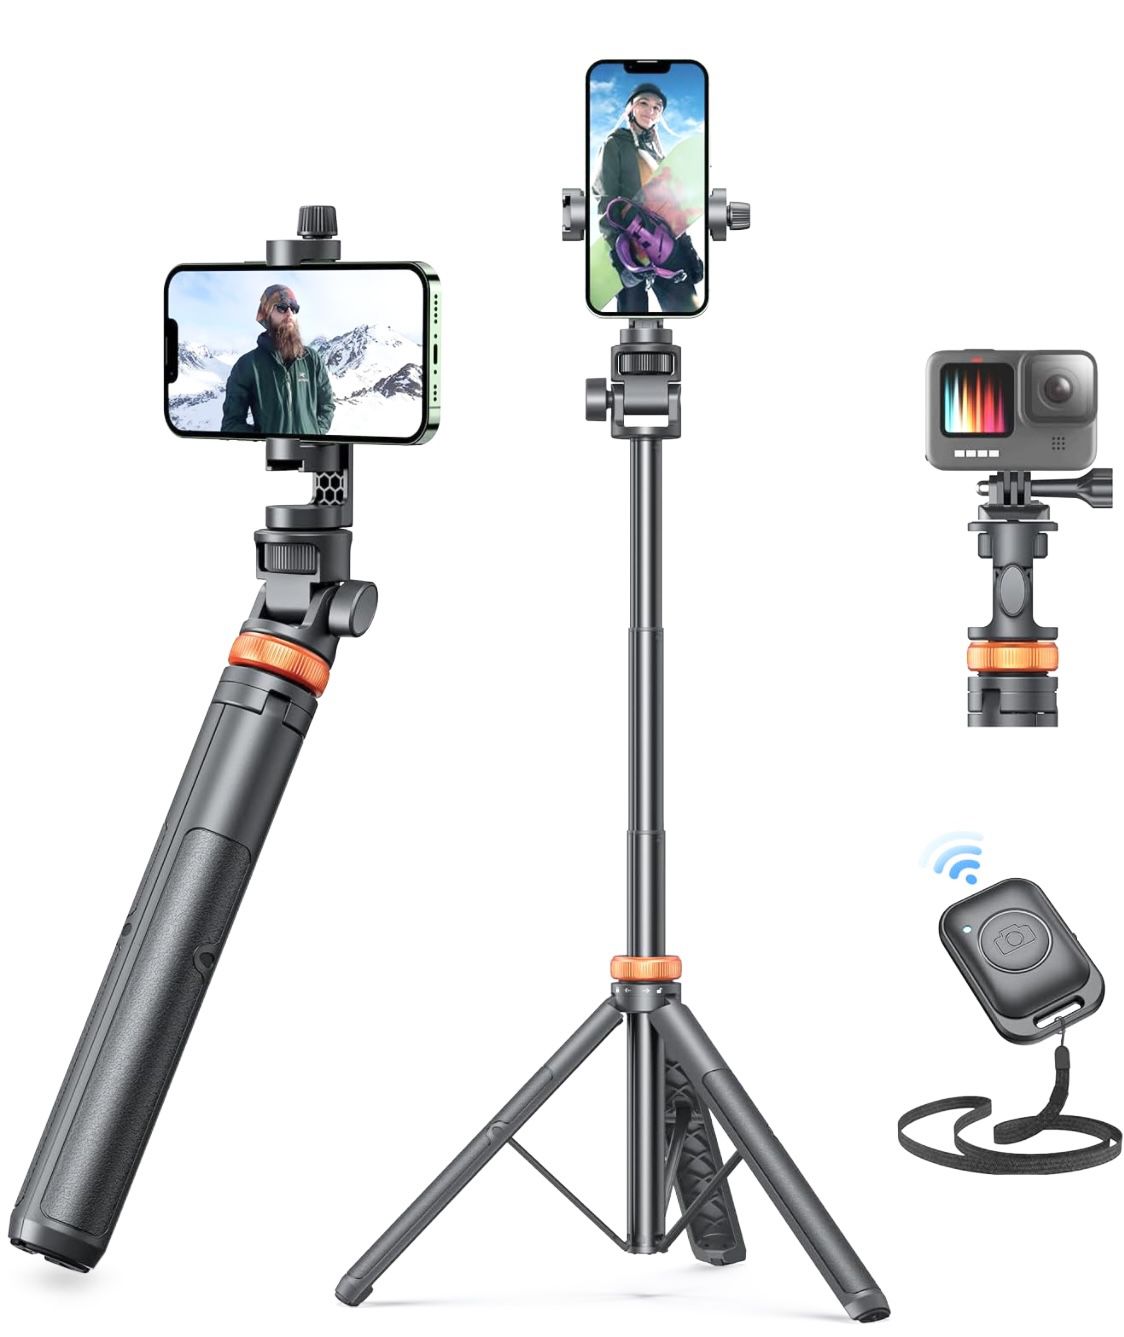 62 Inch Tripod / Selfie Stick With Remote Control 